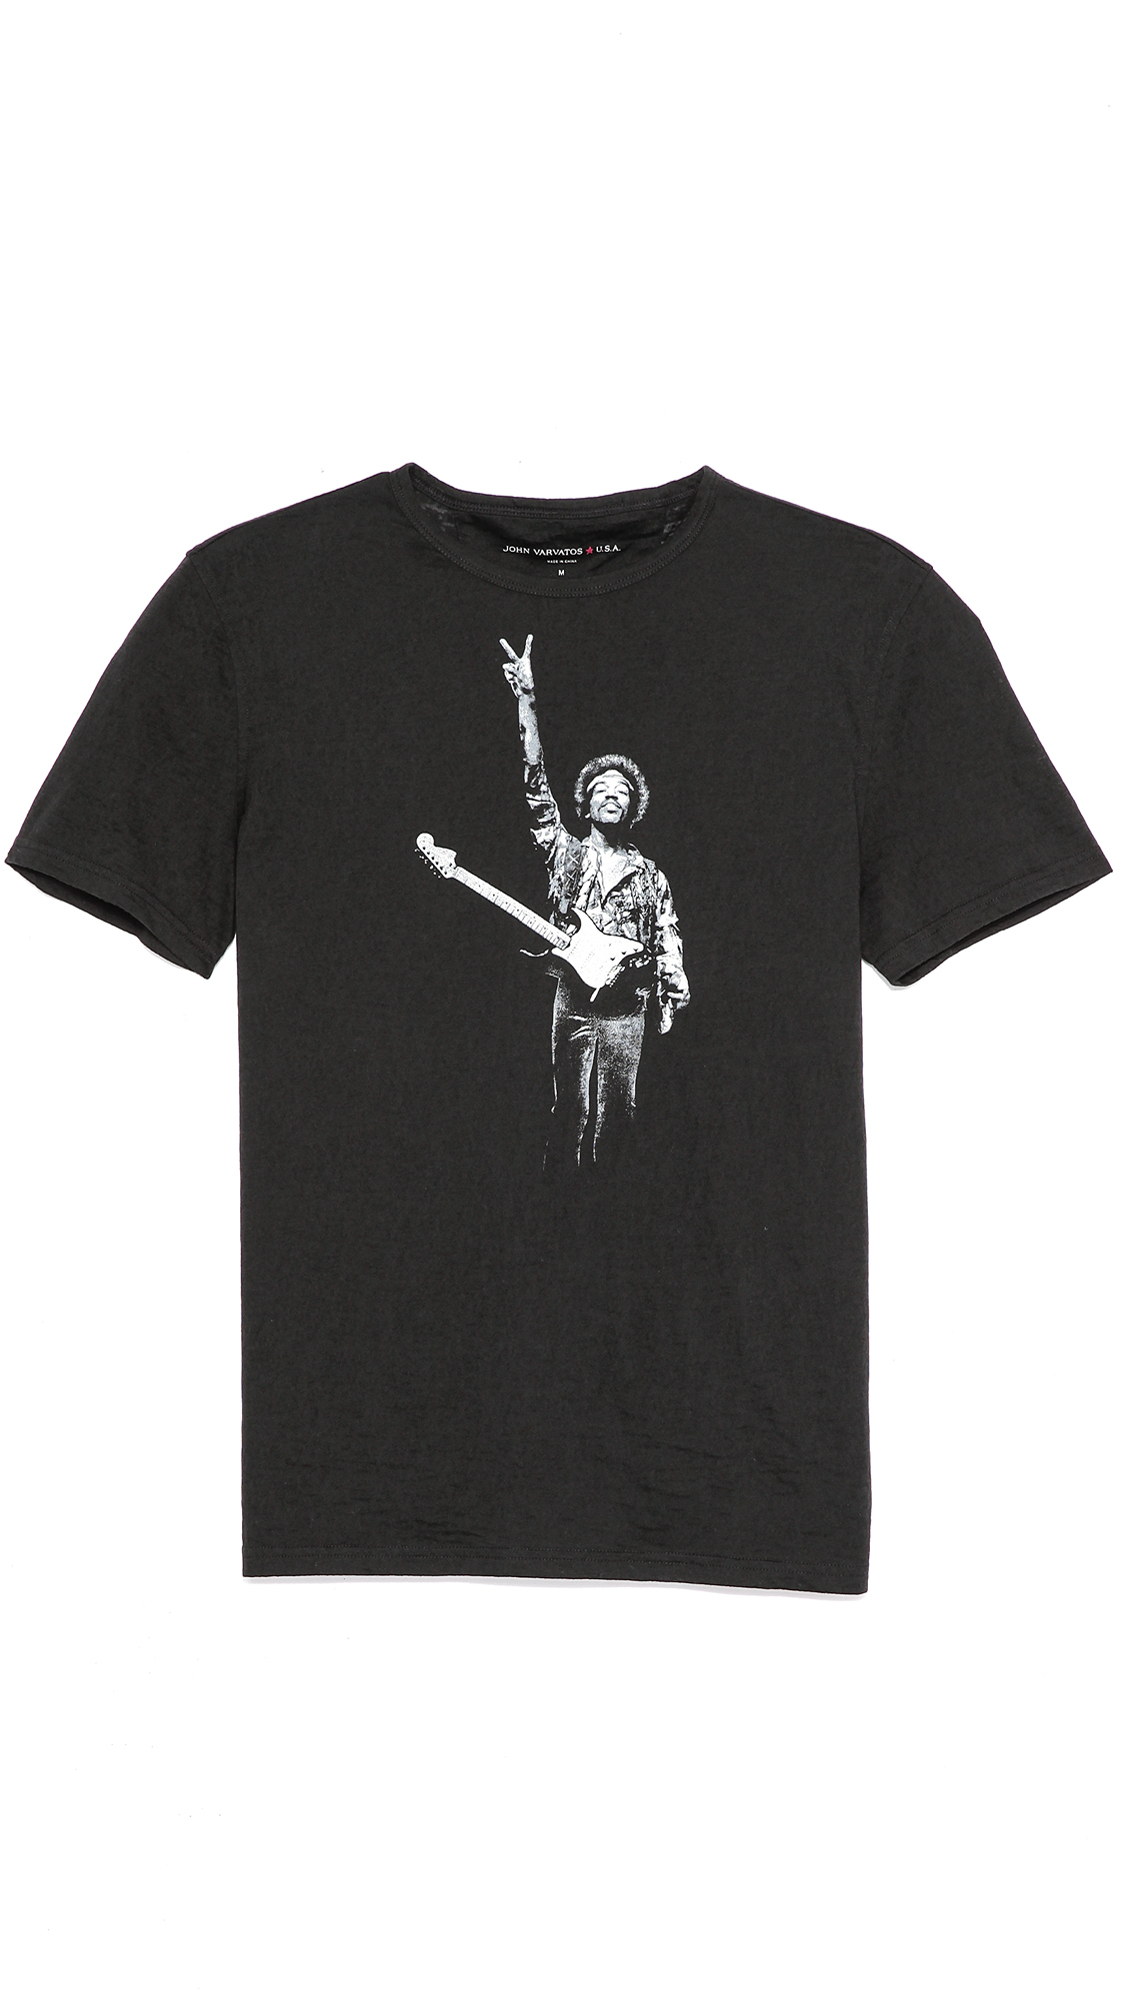 John Varvatos Jimi Hendrix Graphic Tshirt in Black for Men - Lyst